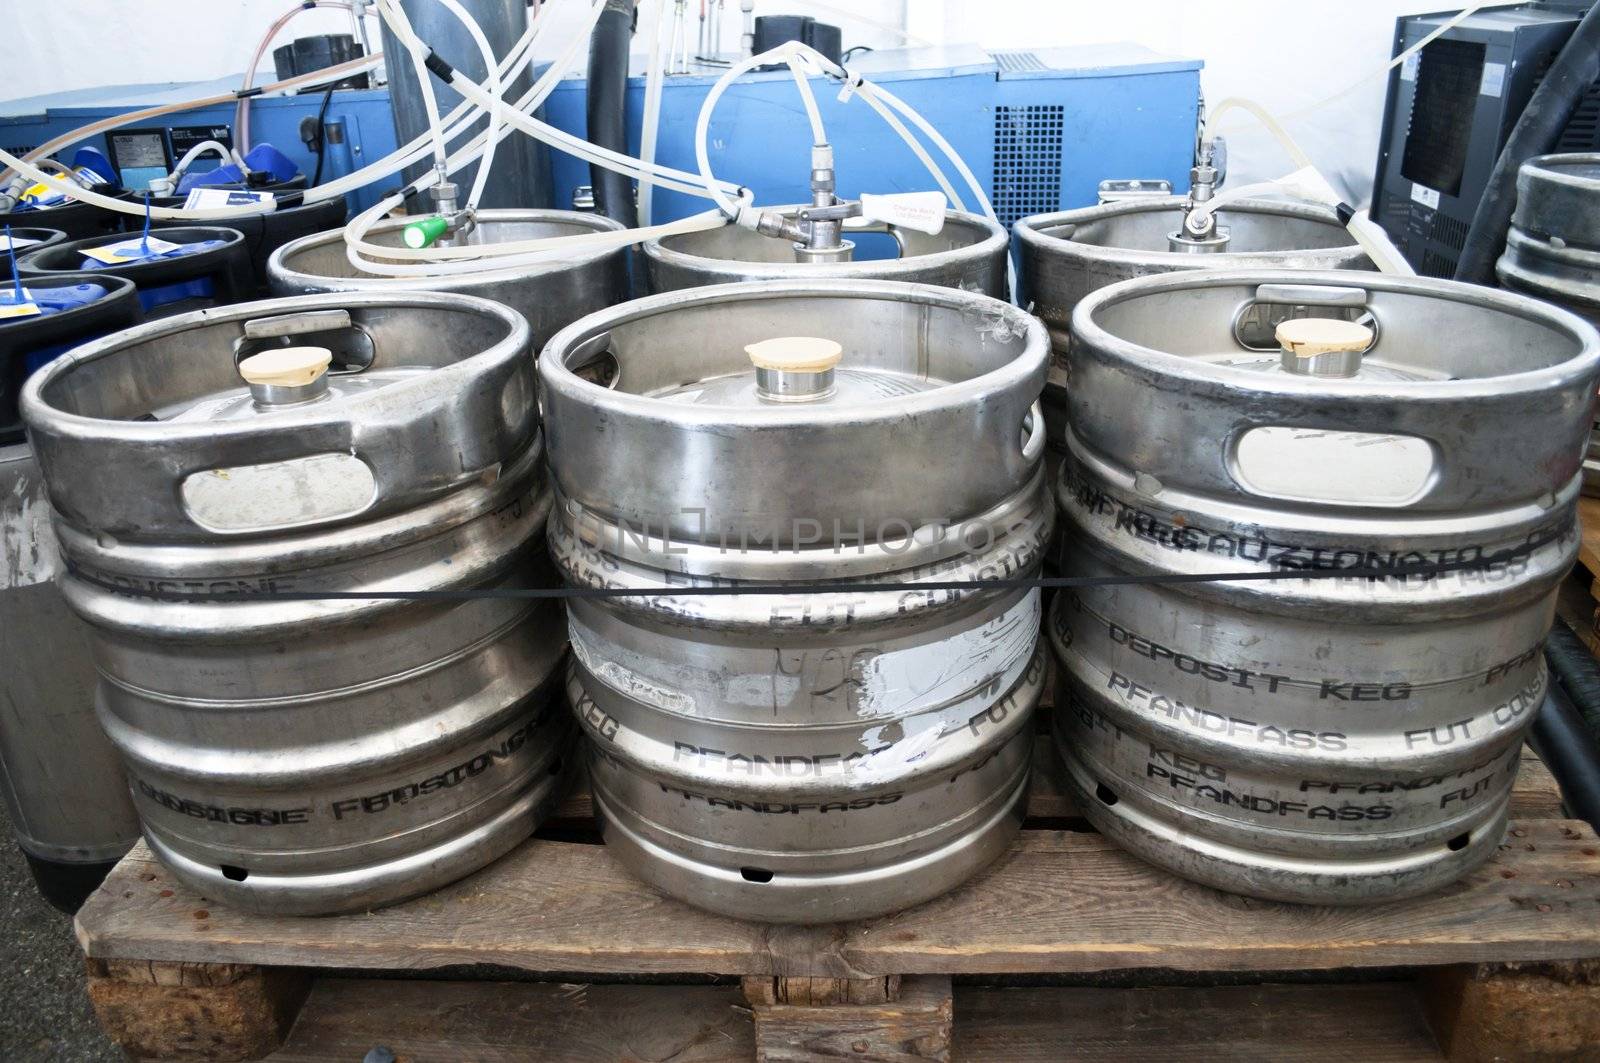 Steel indutrial barrels of beer stocked in storage